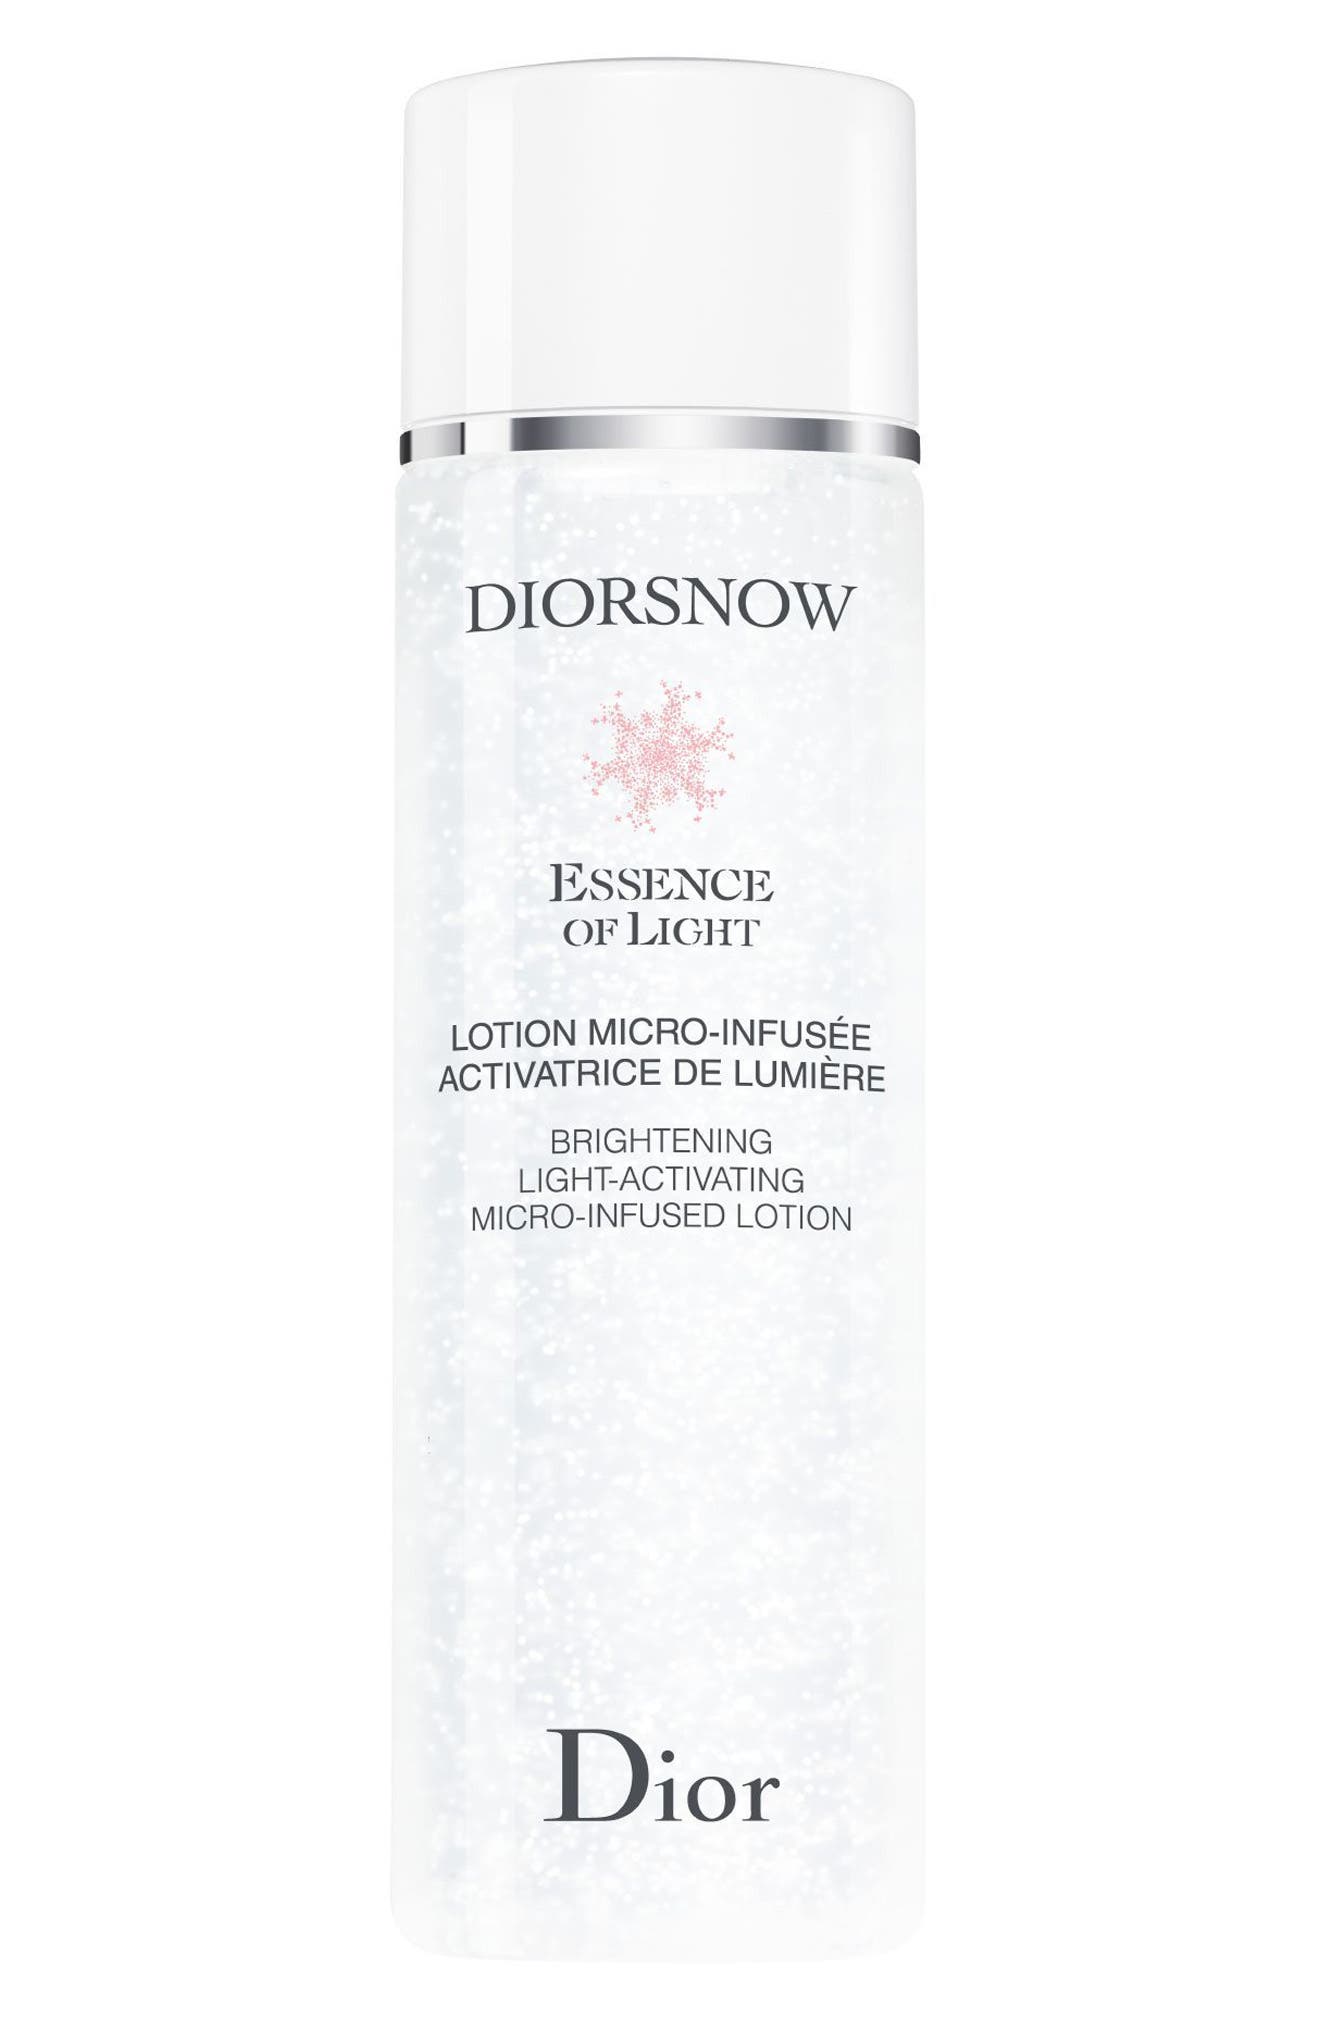 diorsnow essence of light lotion